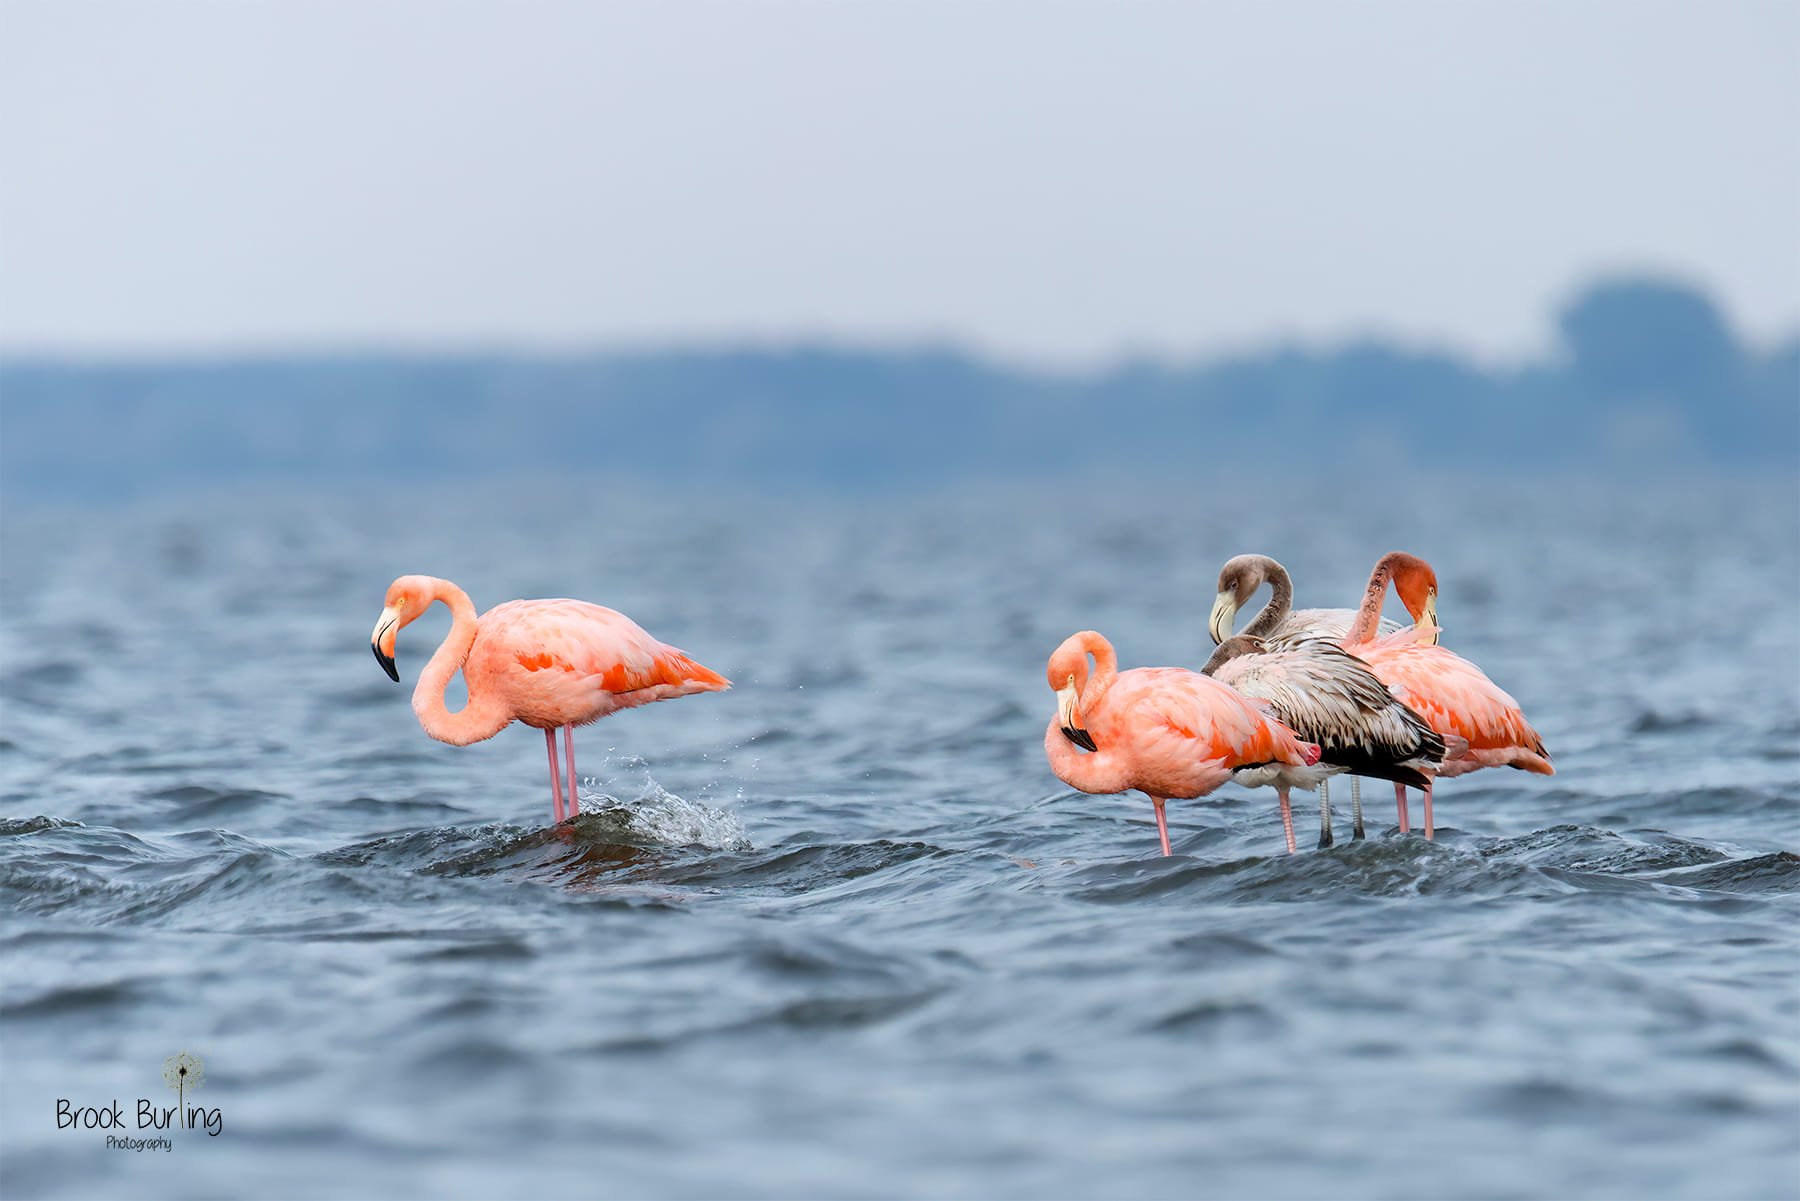 The Flamingos Emerge